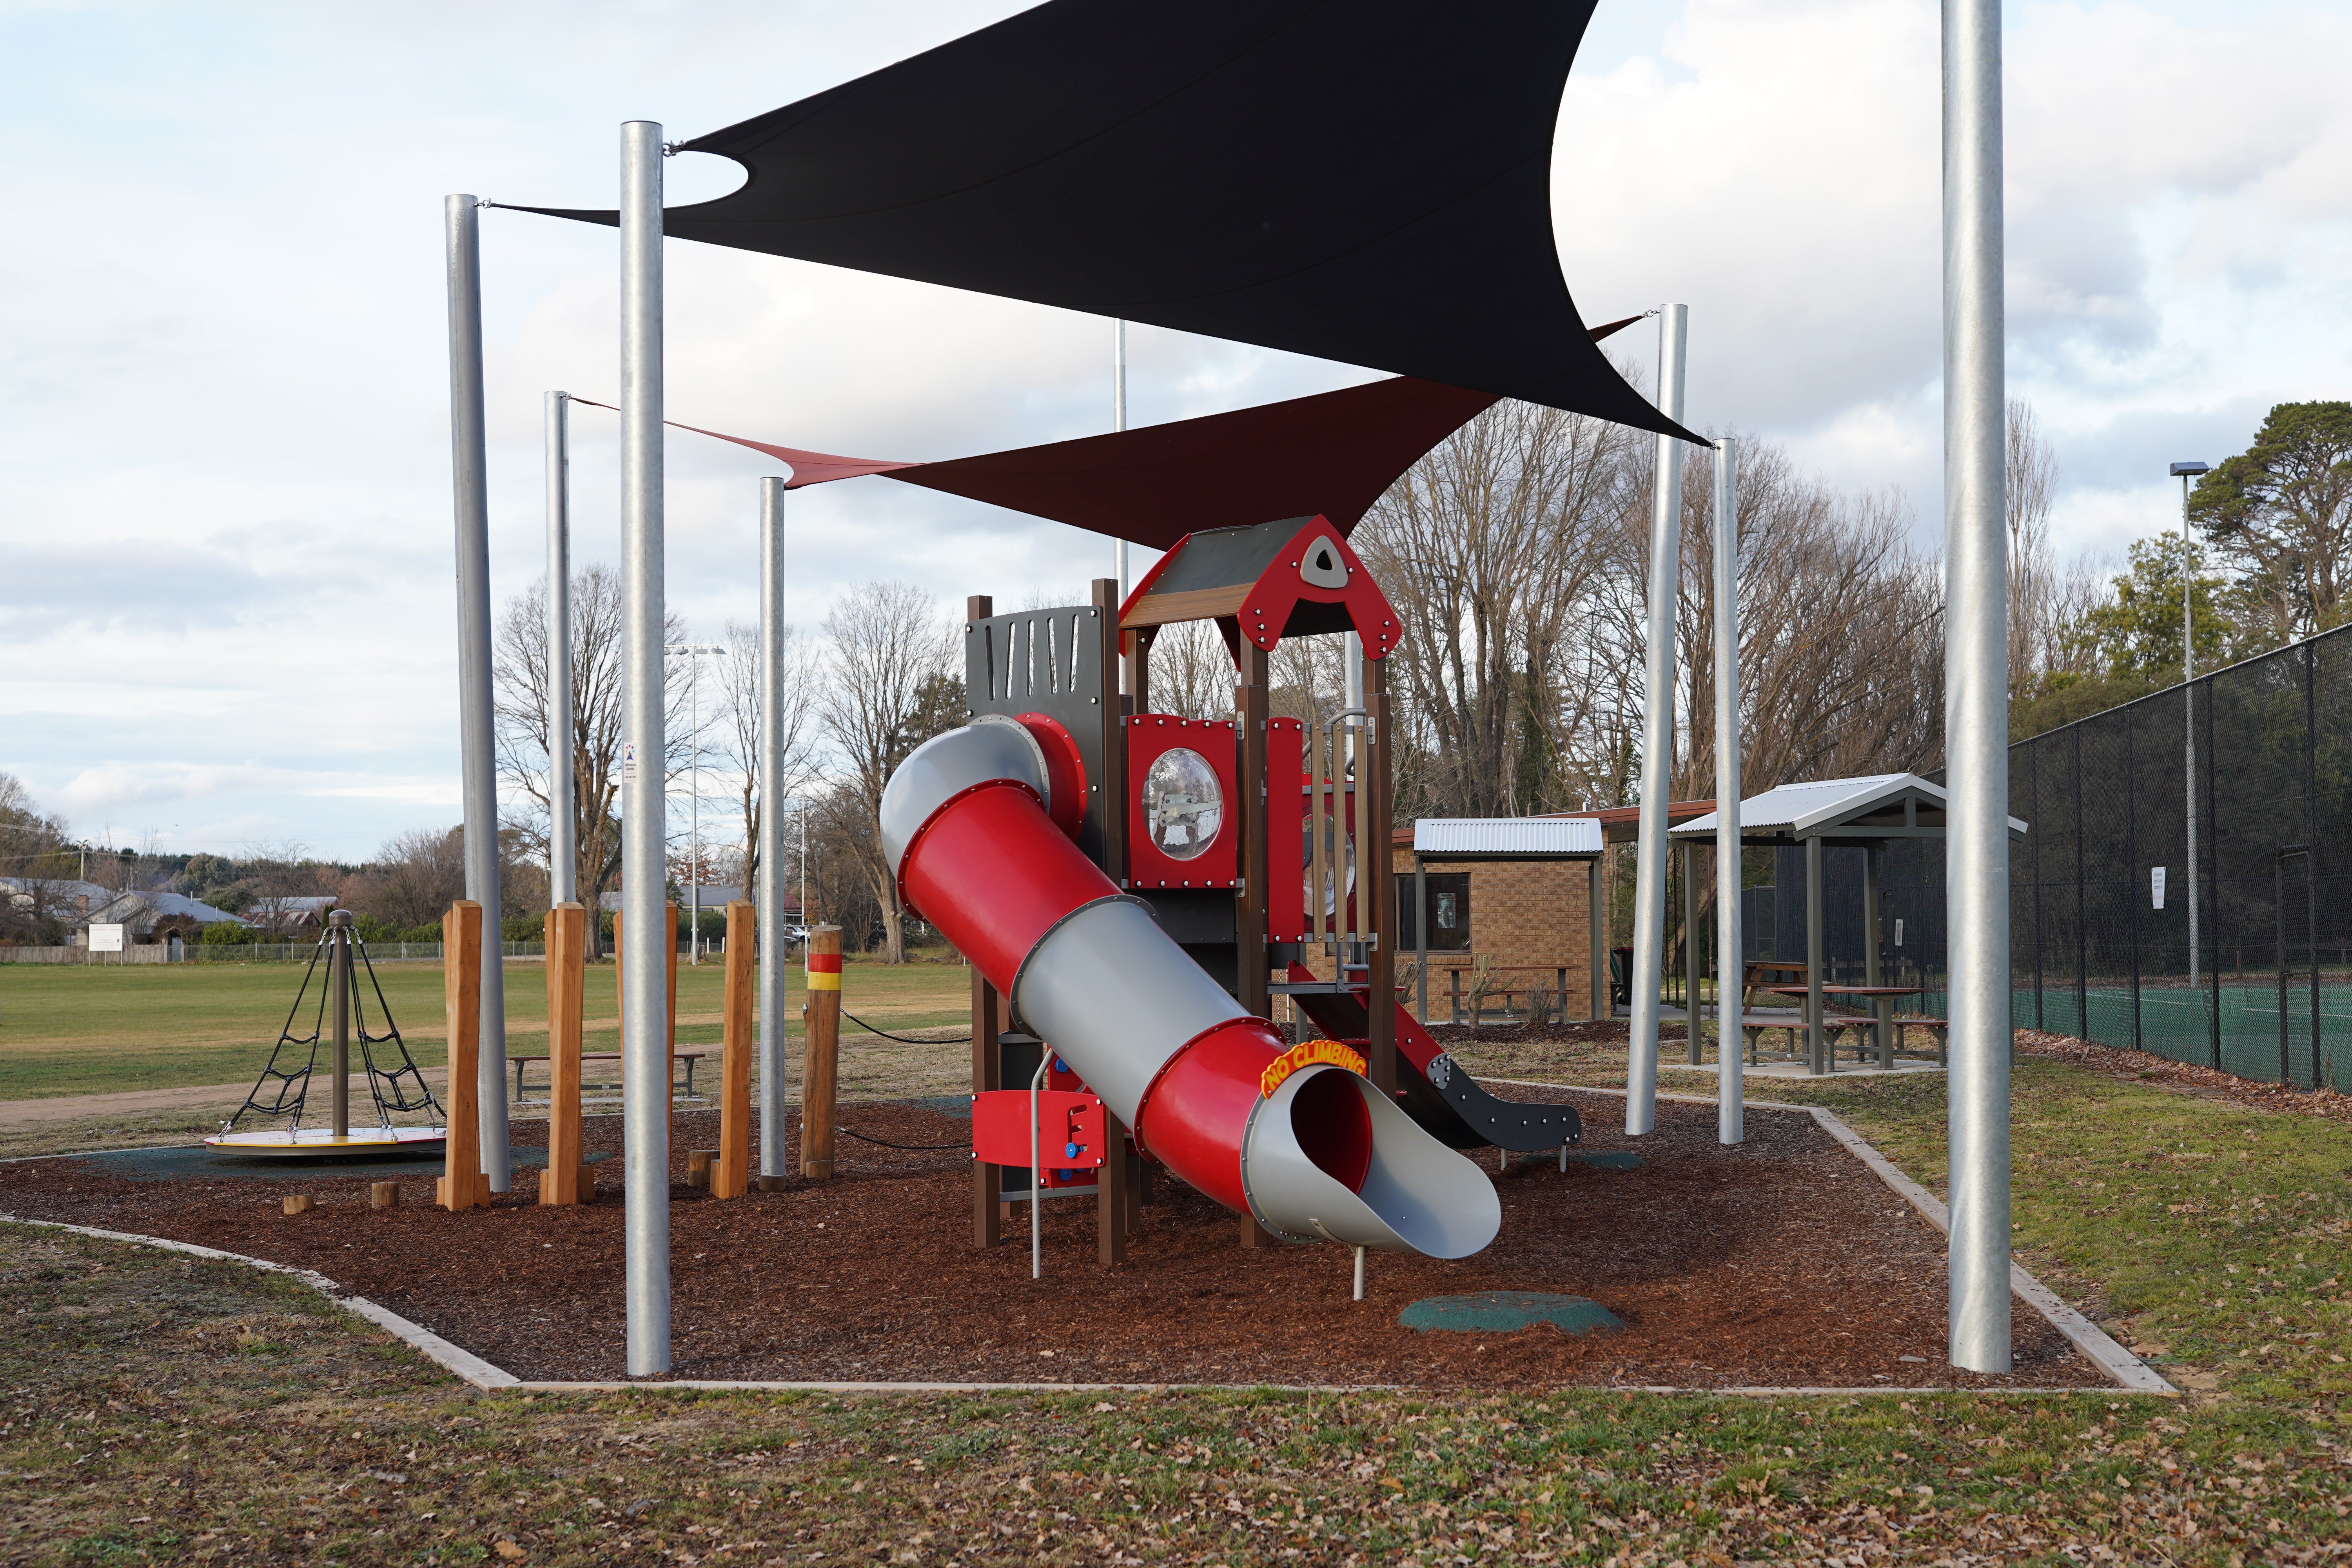 Braidwood Recreation Grounds and Playground - Accommodation Rockhampton